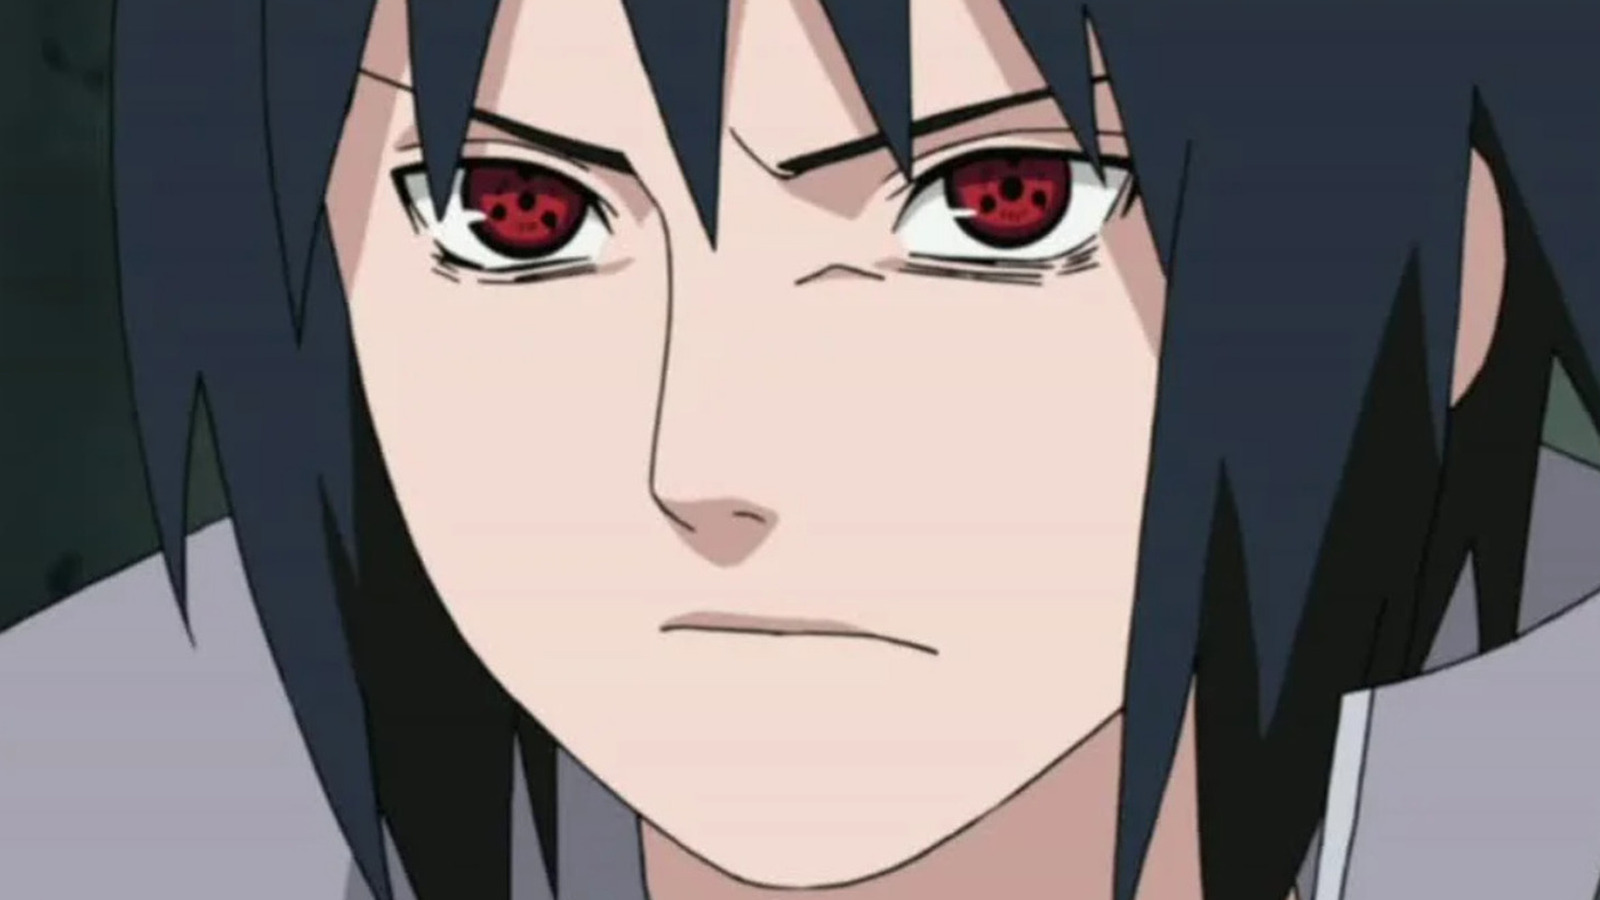 Why do Naruto's eyes change? - Quora